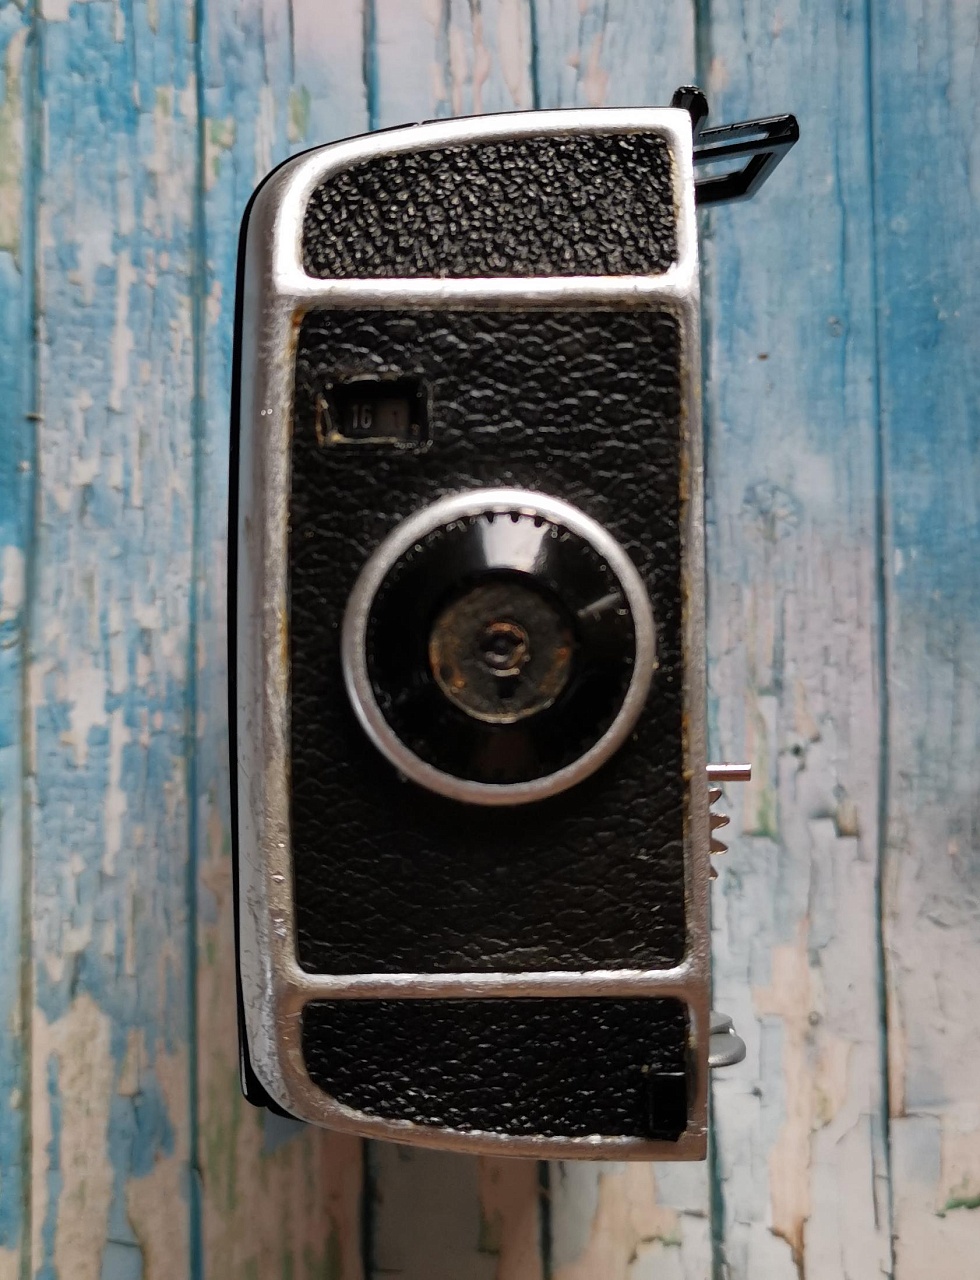 Задник для Rolleiflex SL66 (снимок 6x4.5) фото №4